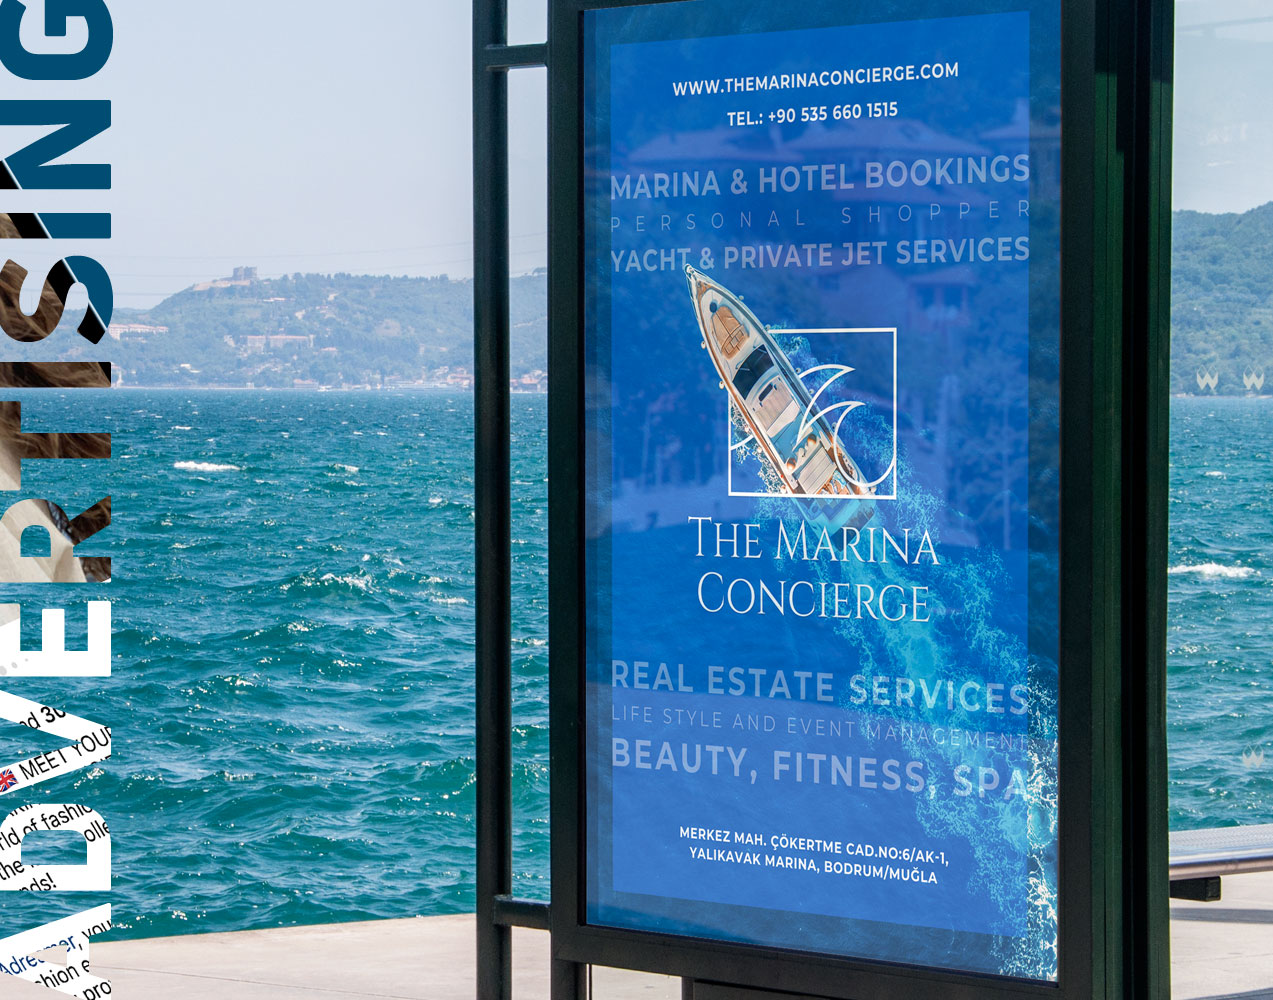 ADVERTISING - The Marina Concierge